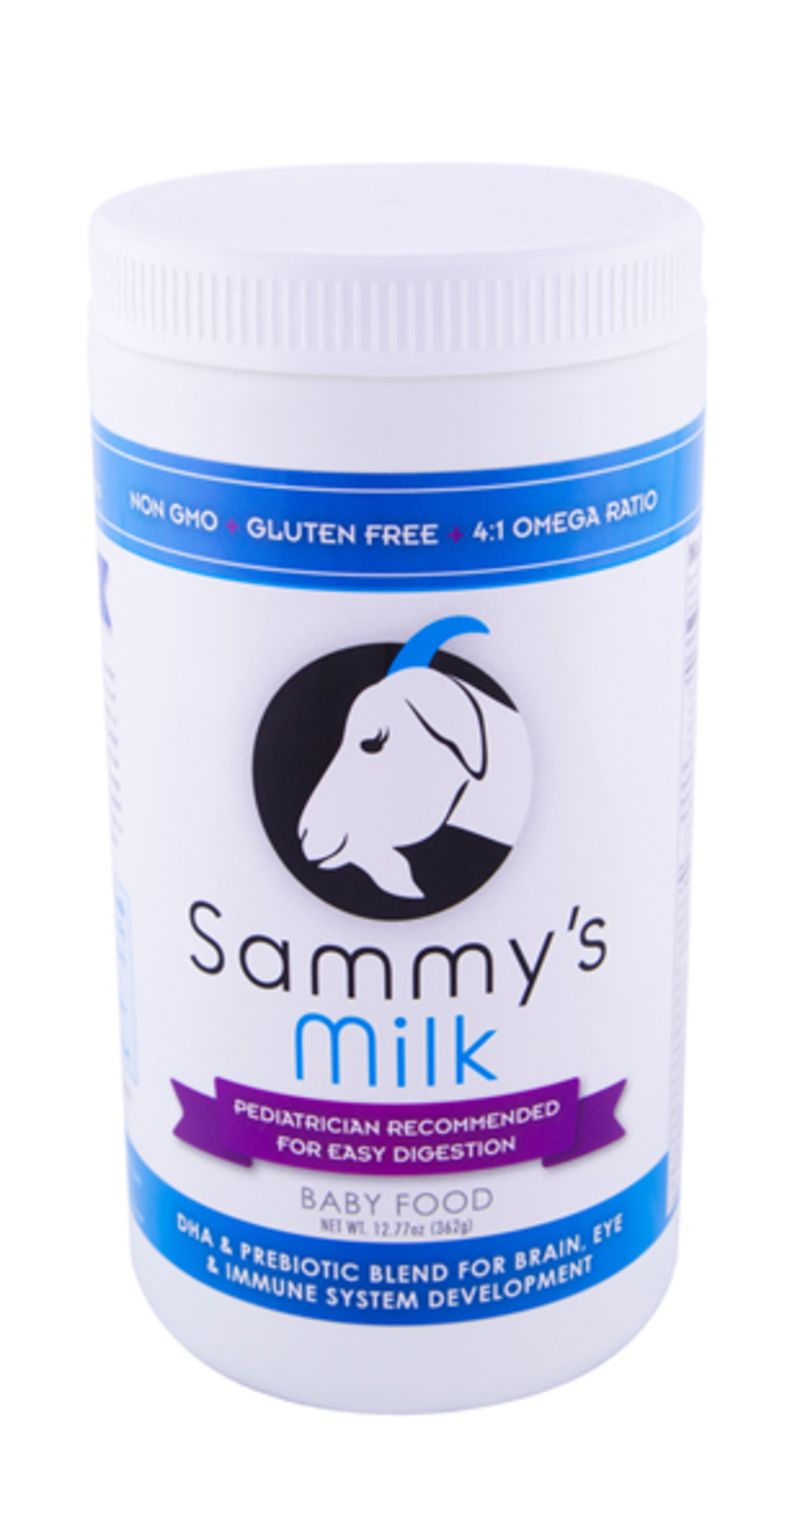 161001163828 Sammys Milk Baby Food ?q=w 800,c Fill